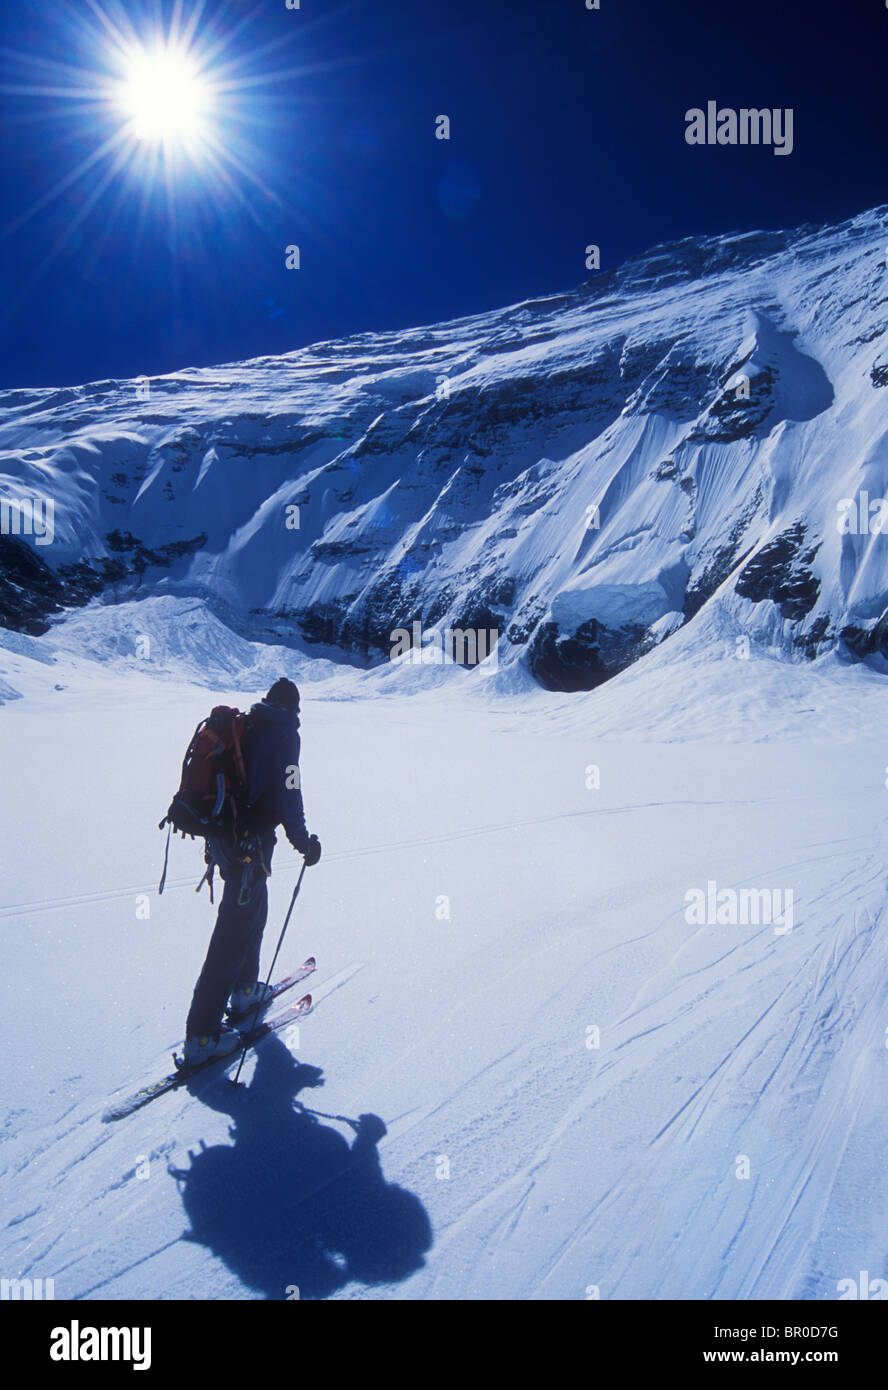 A man ski touring under blue skies on a glacier. Stock Photo